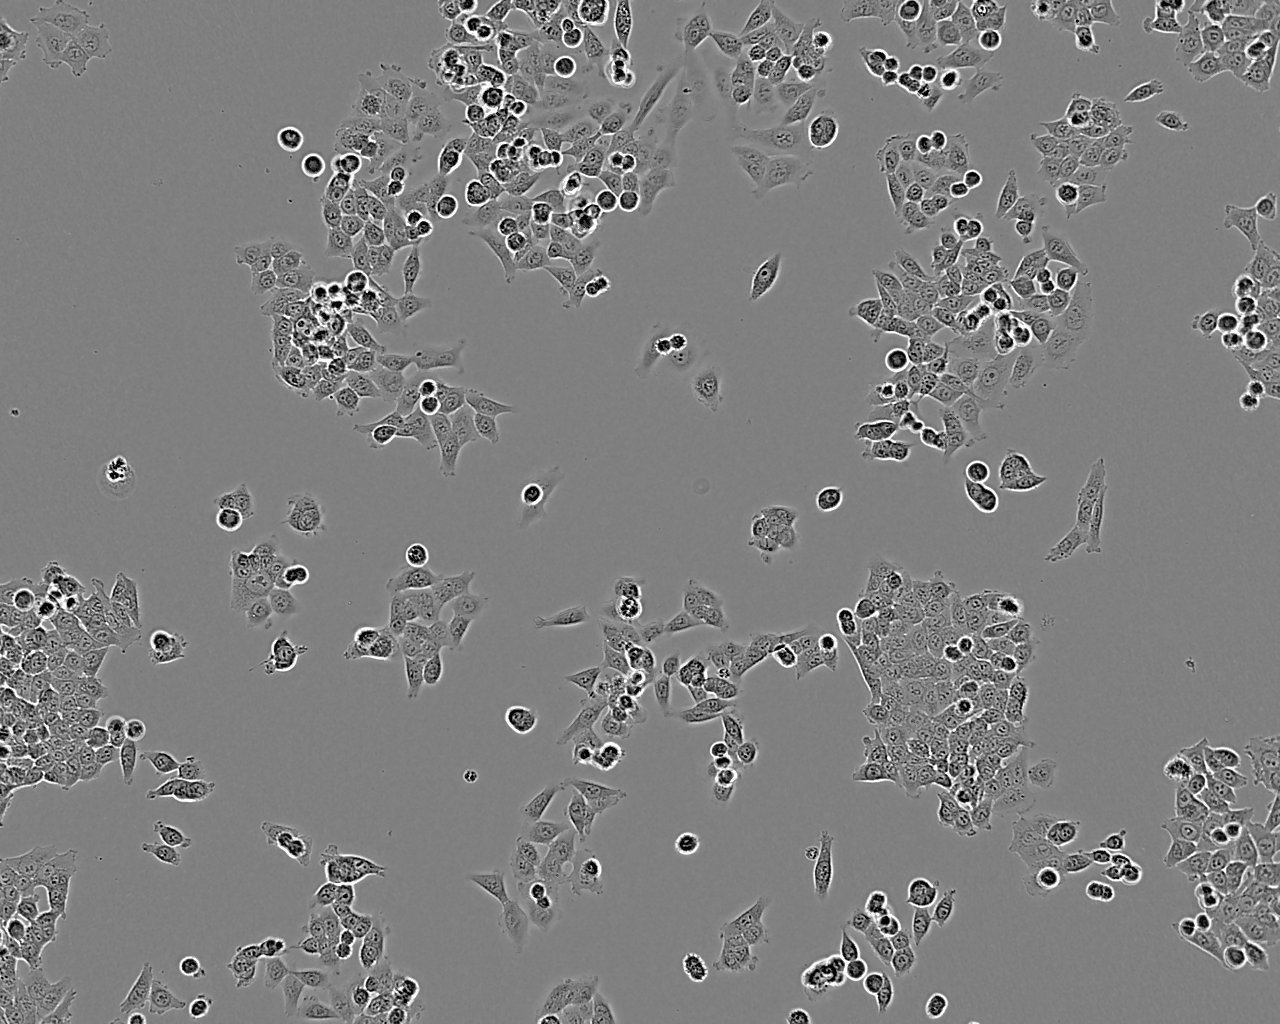 16HBE14o- epithelioid cells人支气管上皮样细胞系,16HBE14o- epithelioid cells